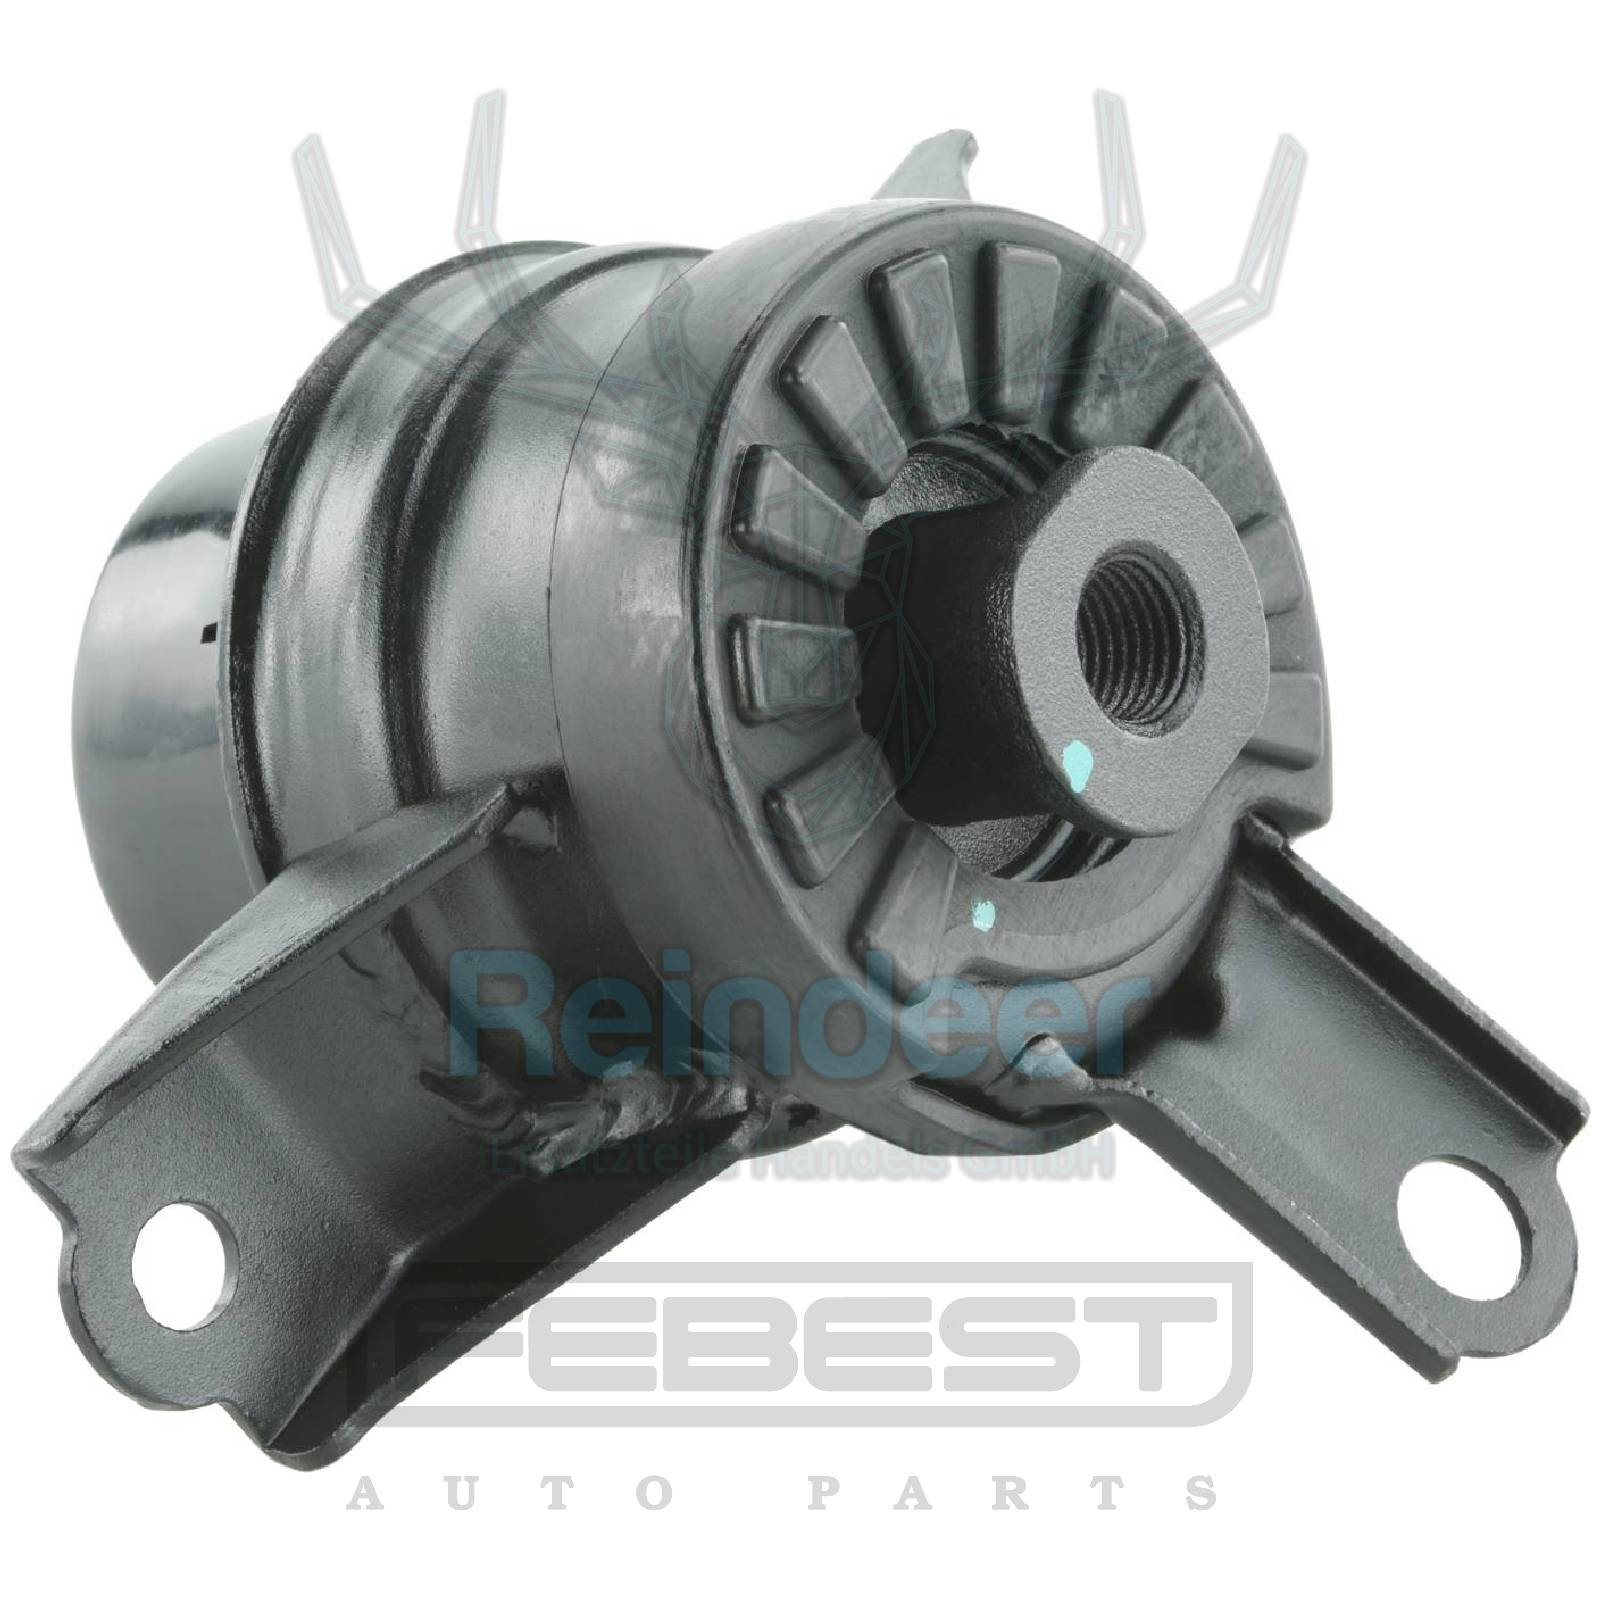 Hydraulic Motor Bearing Right (Hydro) Tm-qnc10rh For Toyota Passo Kgc1 #, qnc10 2004.05-2010.02 [Jp]